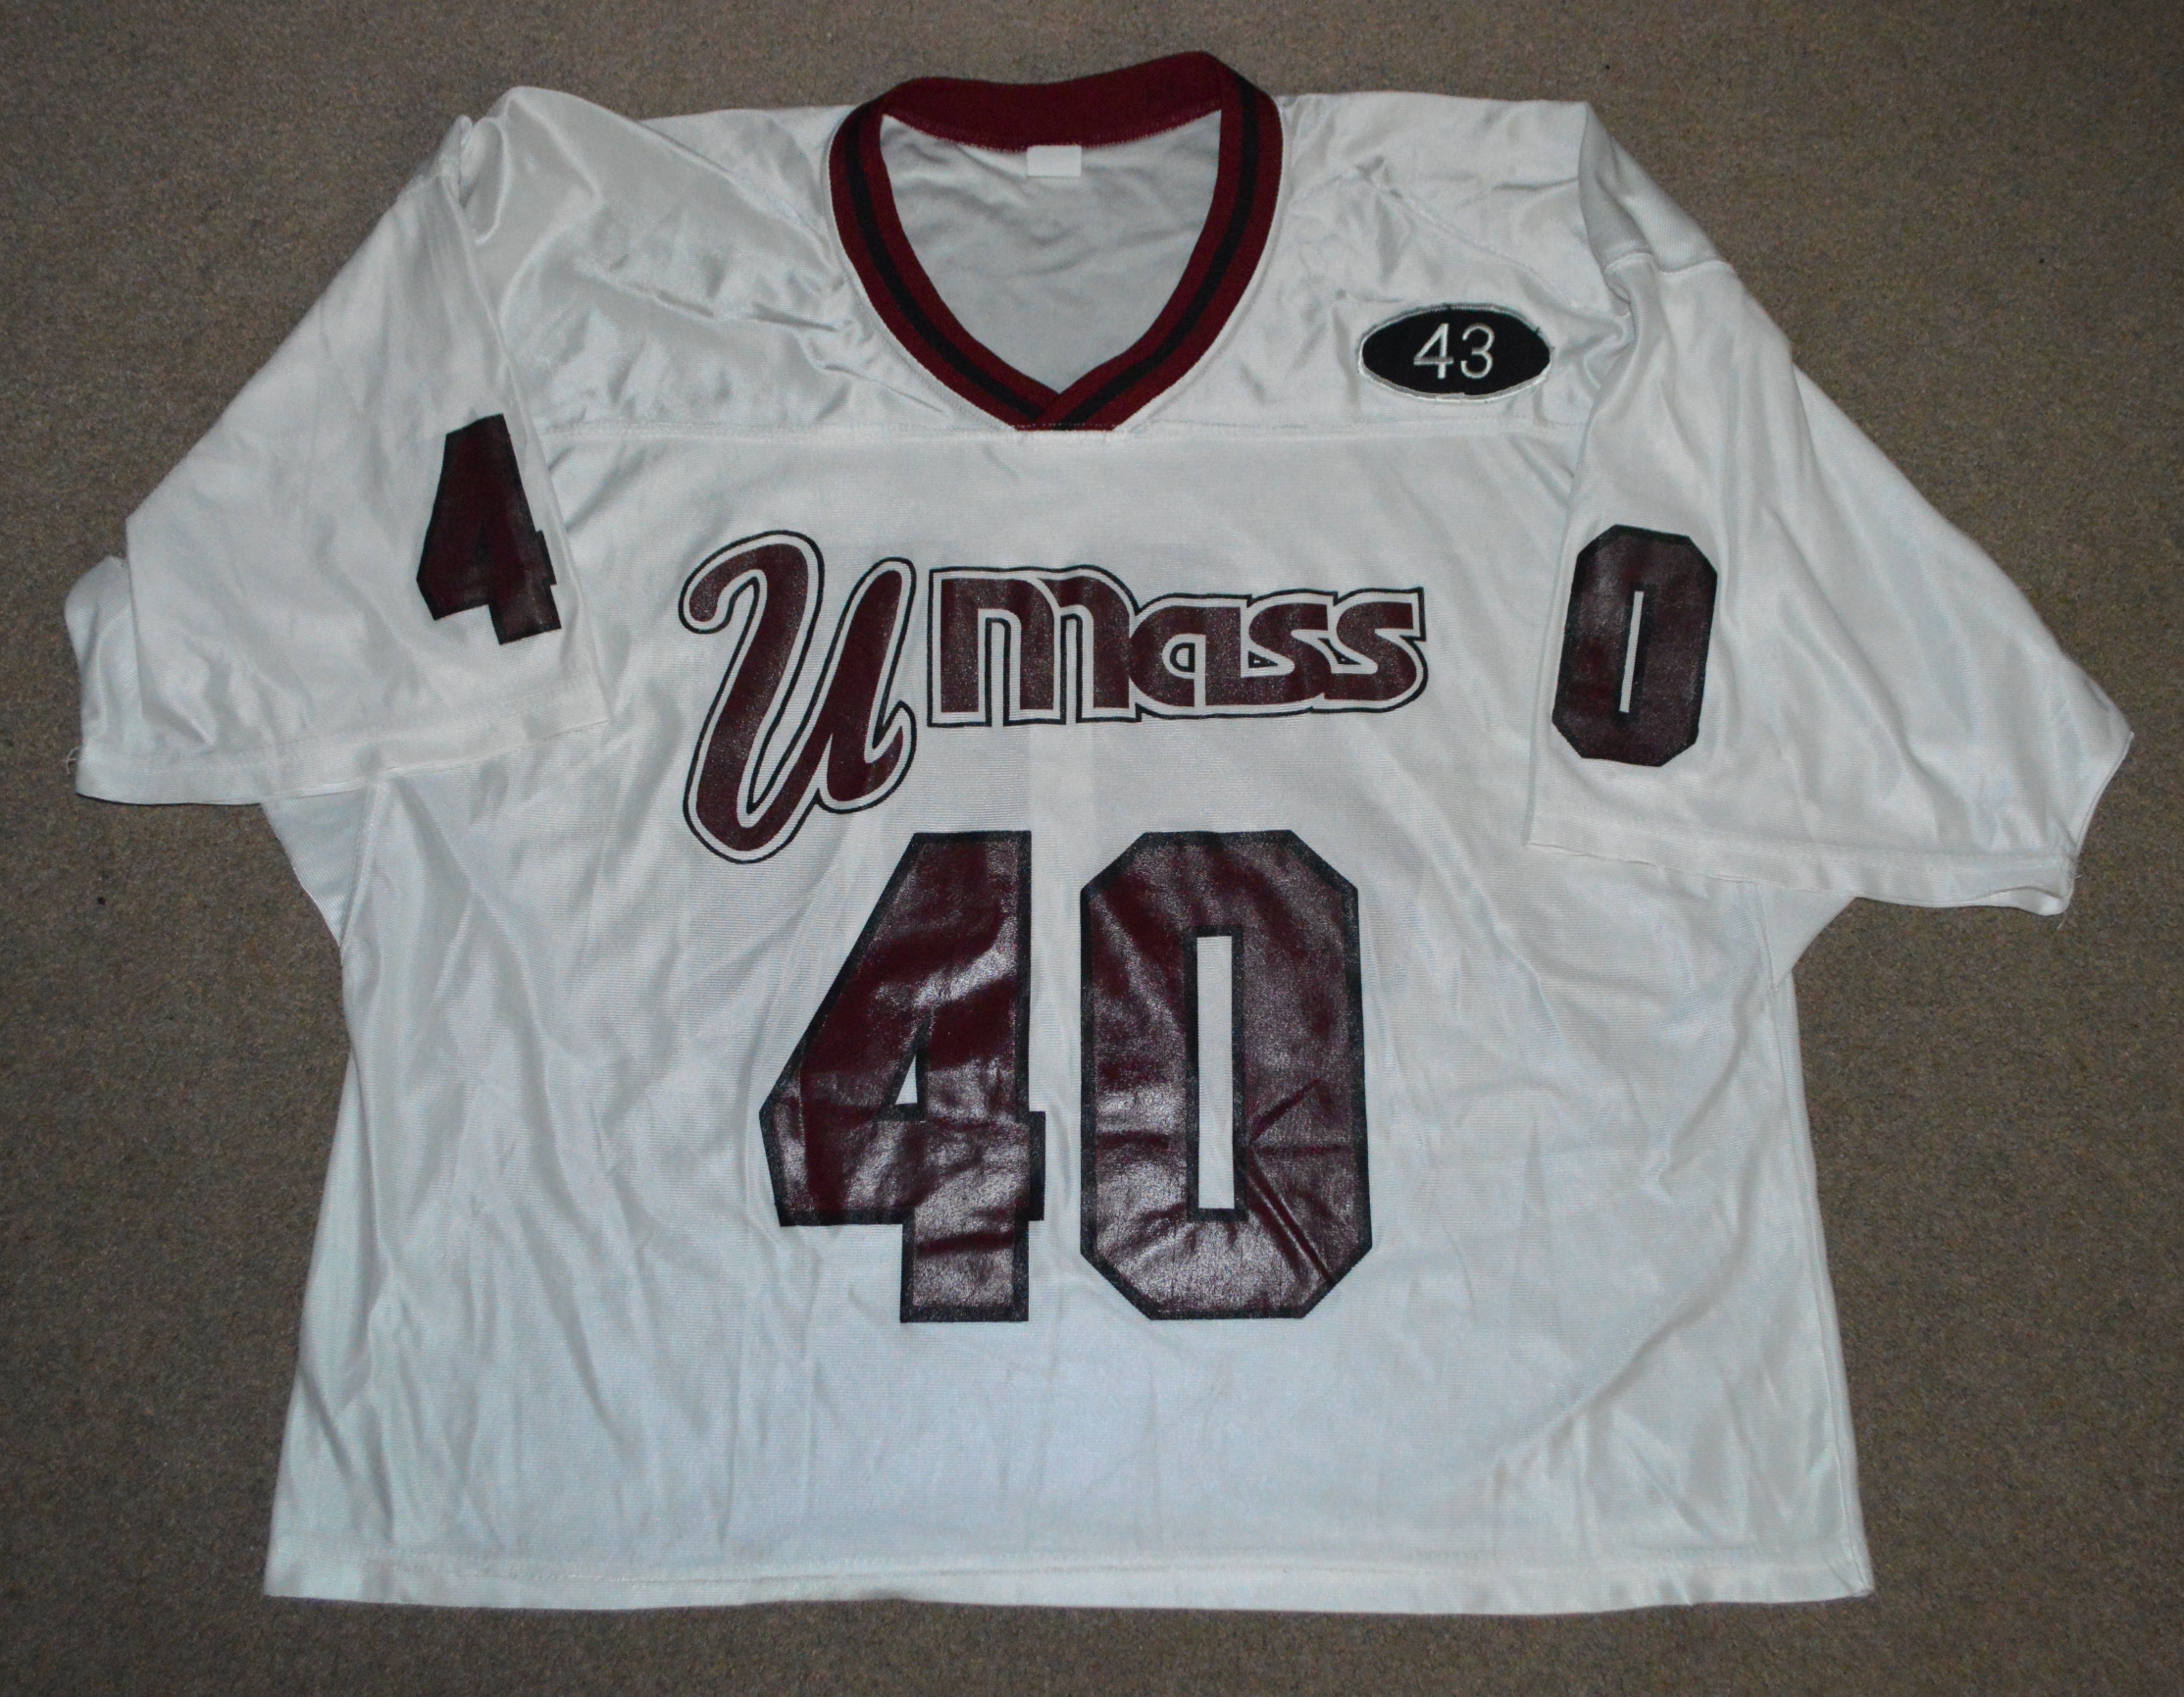 UMass Minutemen Lacrosse 2000 Game Worn Used Jersey